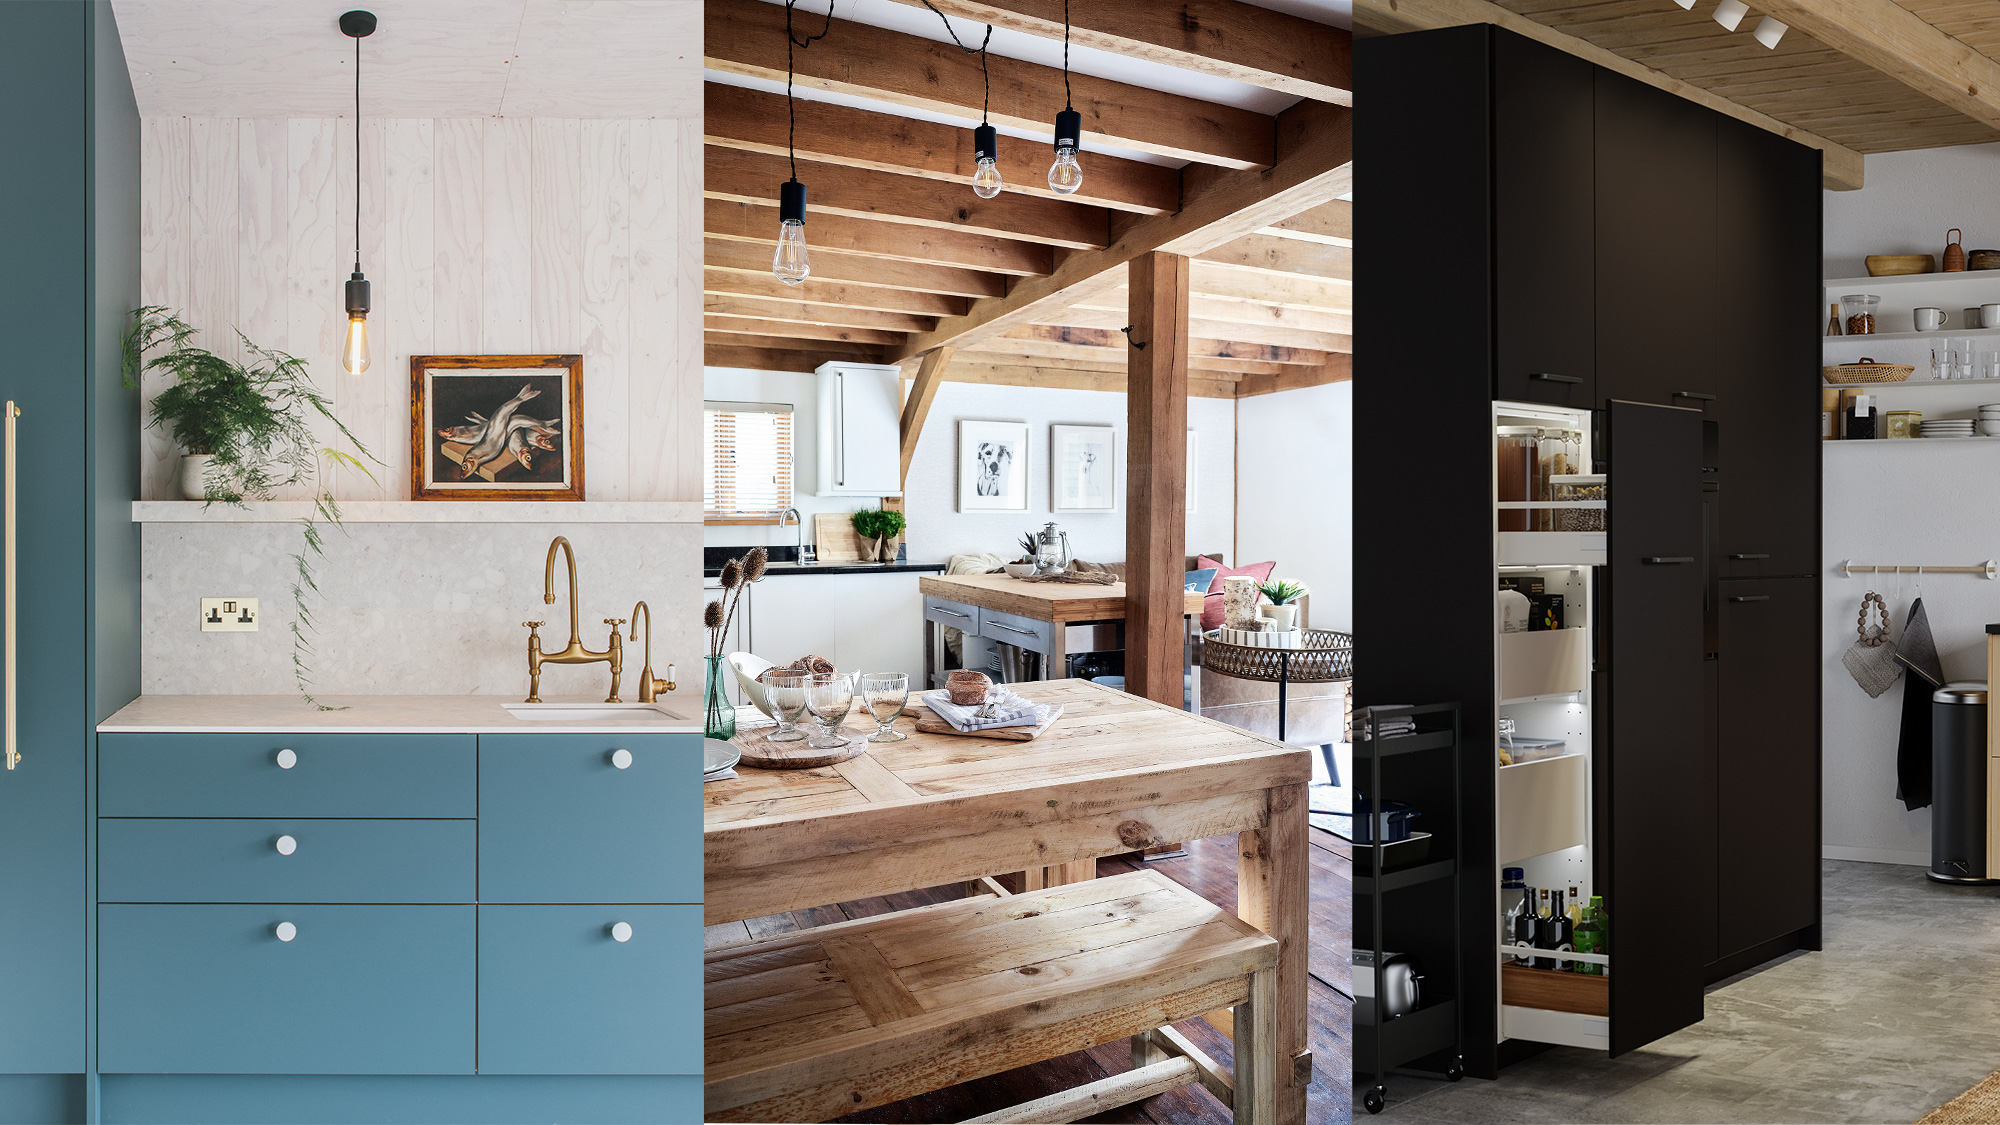 Smart ideas for kitchen storage - IKEA